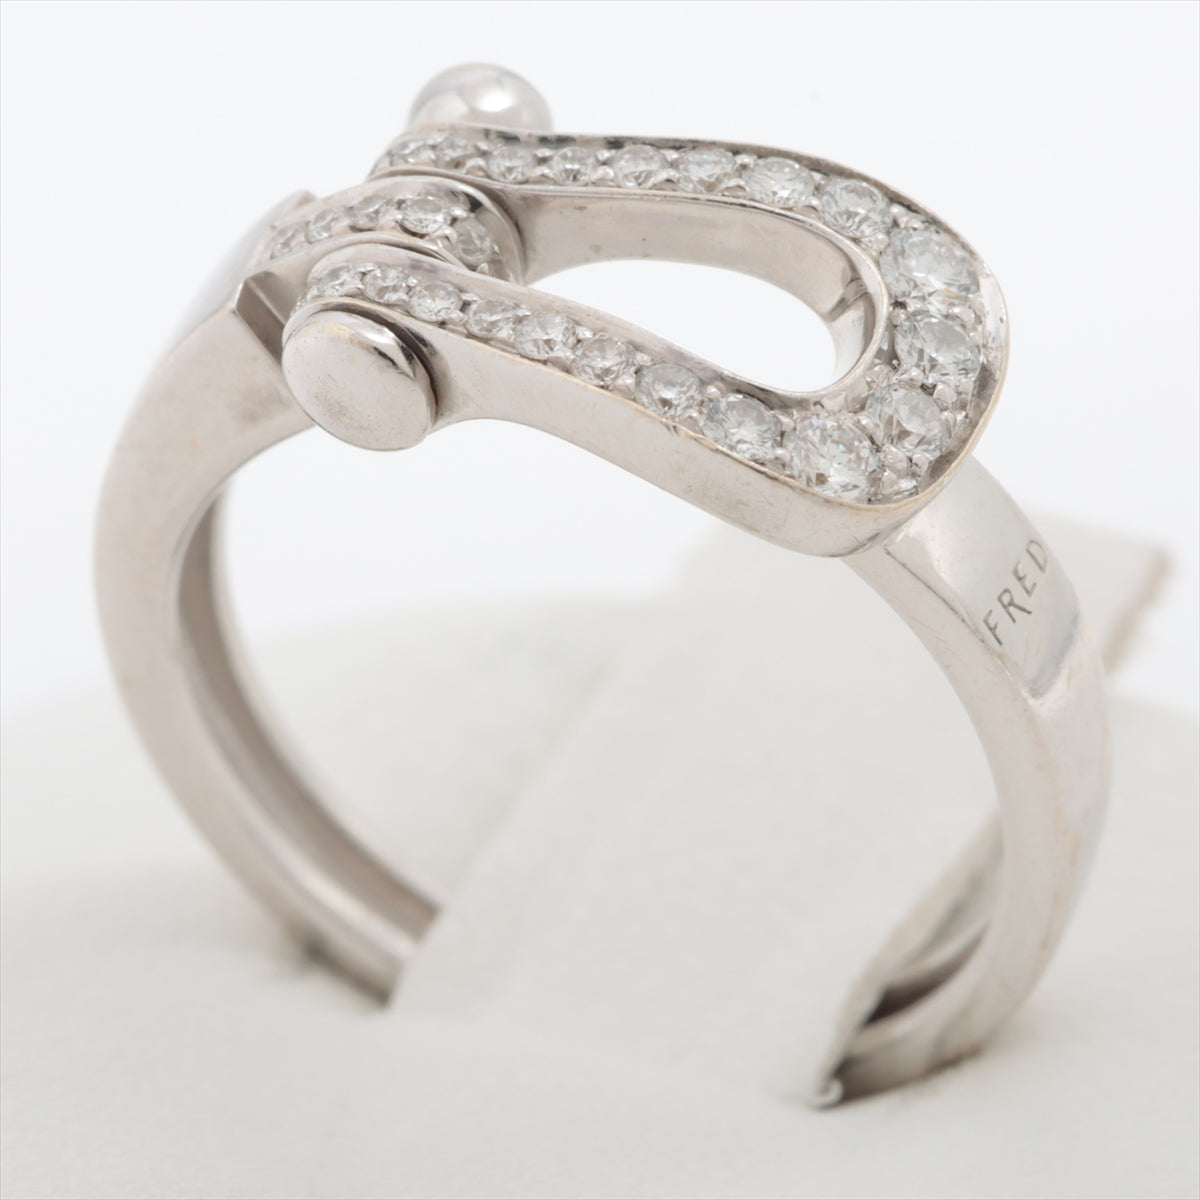 Fred Force 10 Medium diamond rings 750(WG) 3.4g 48